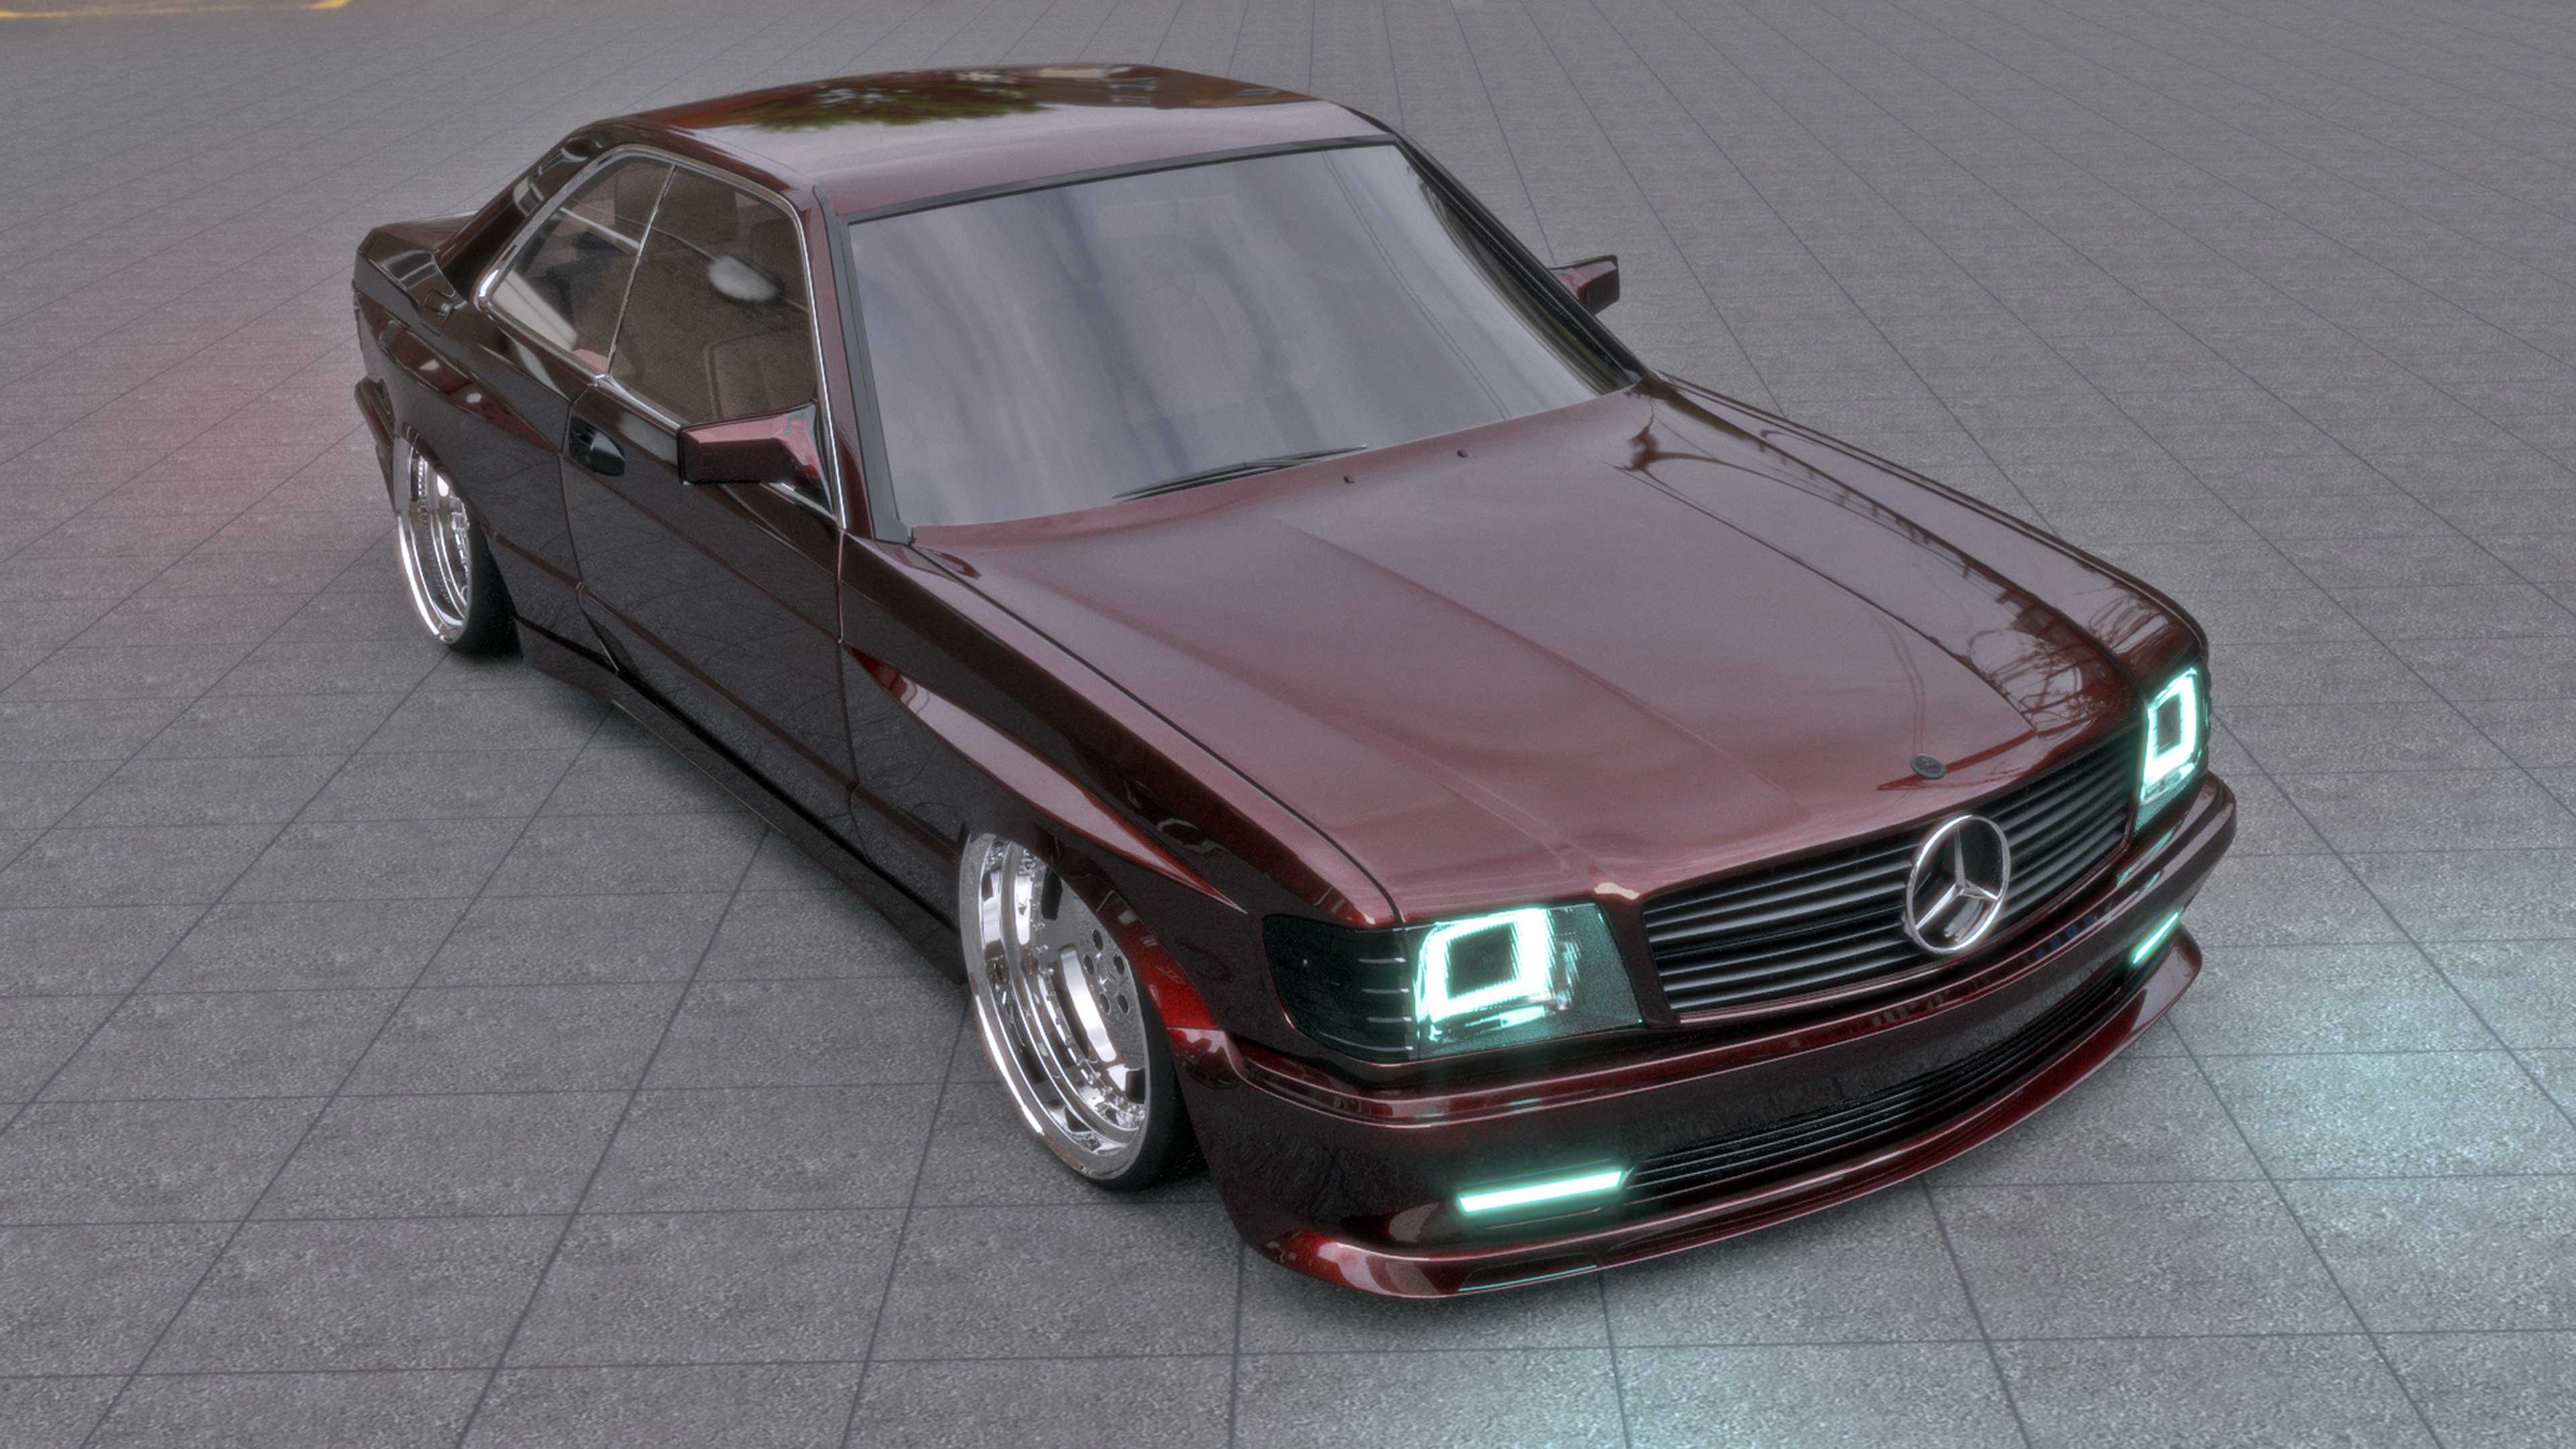 General 3840x2160 photoshopped 3dsmax realistic CGI Mercedes-Benz